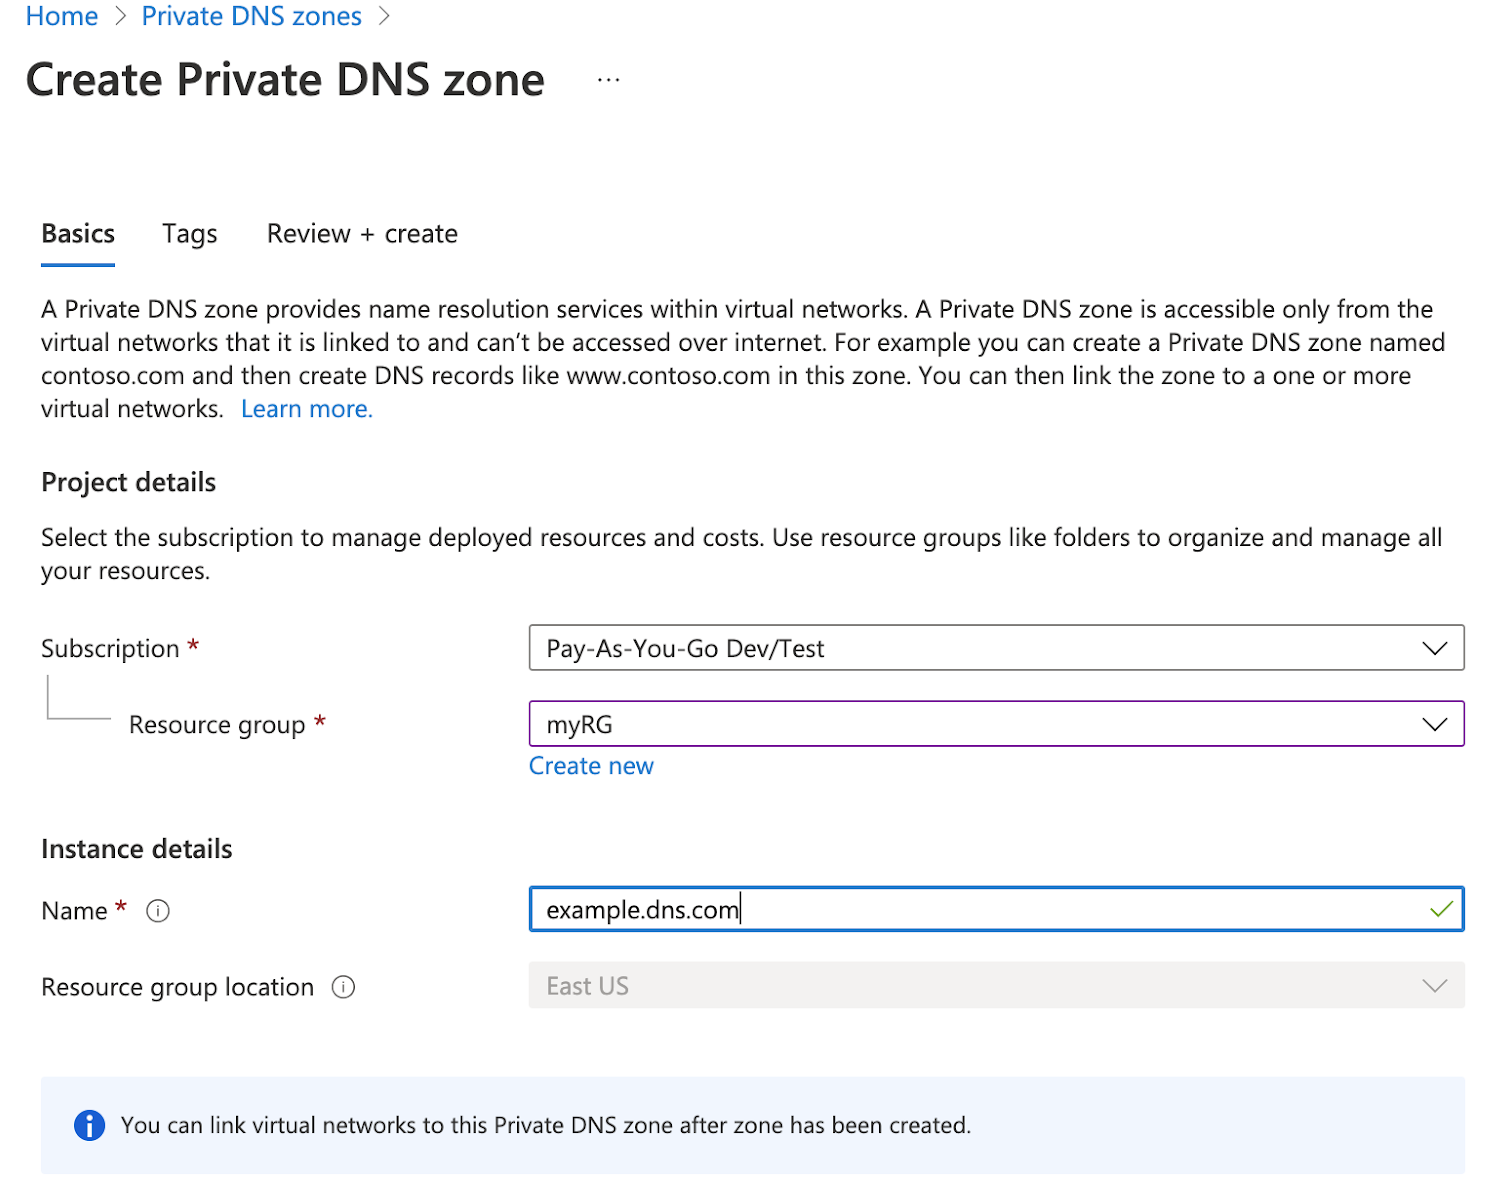 Private DNS: basics tab